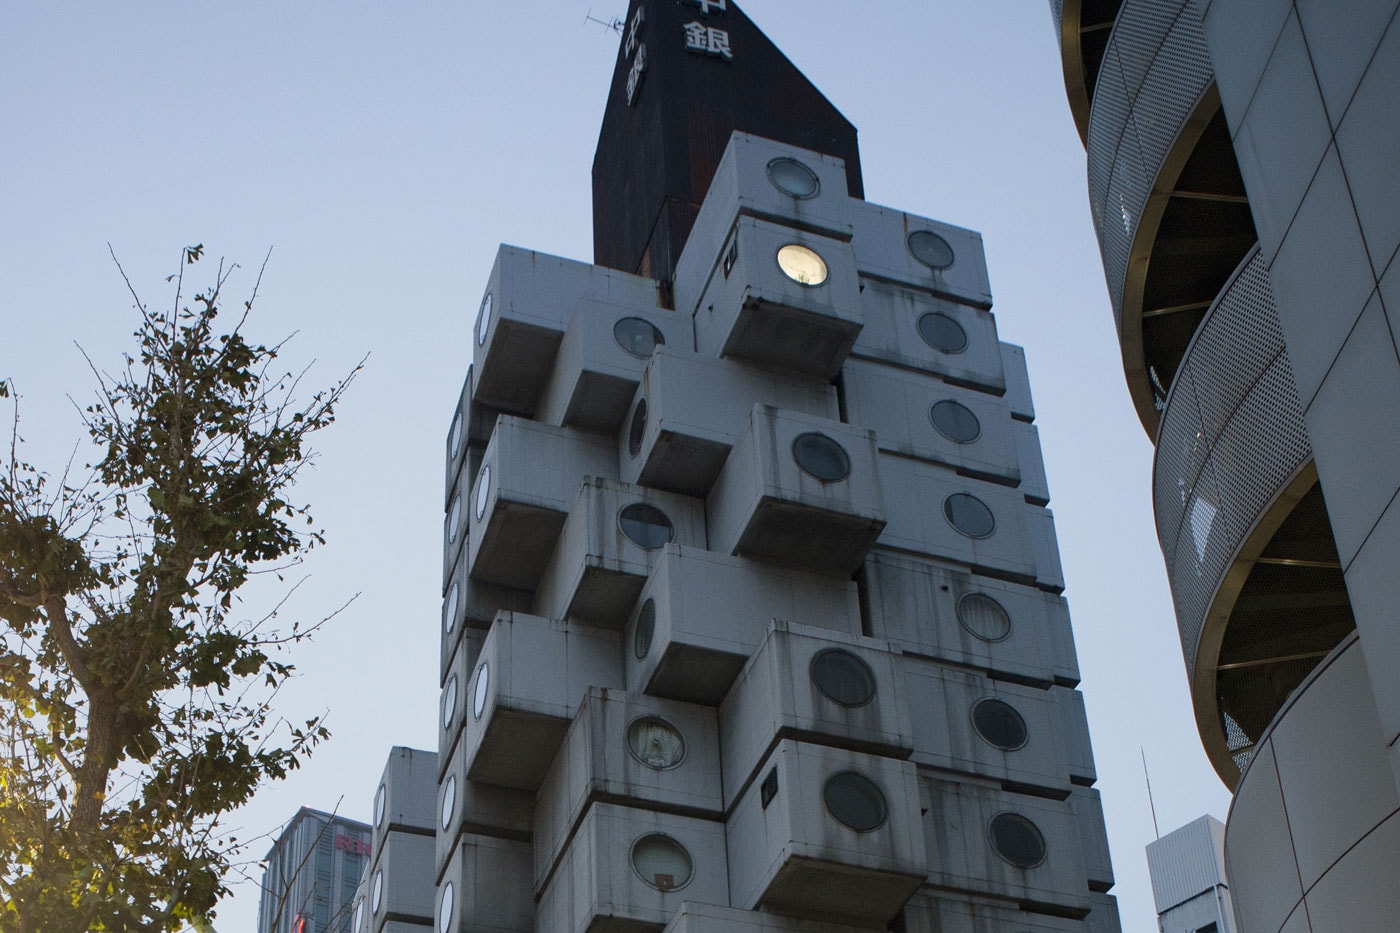 Japan Tokyo contemporary architecture nakagin capsule tower futuristic vision urban living porthole metabolism plugged april 12 unesco 